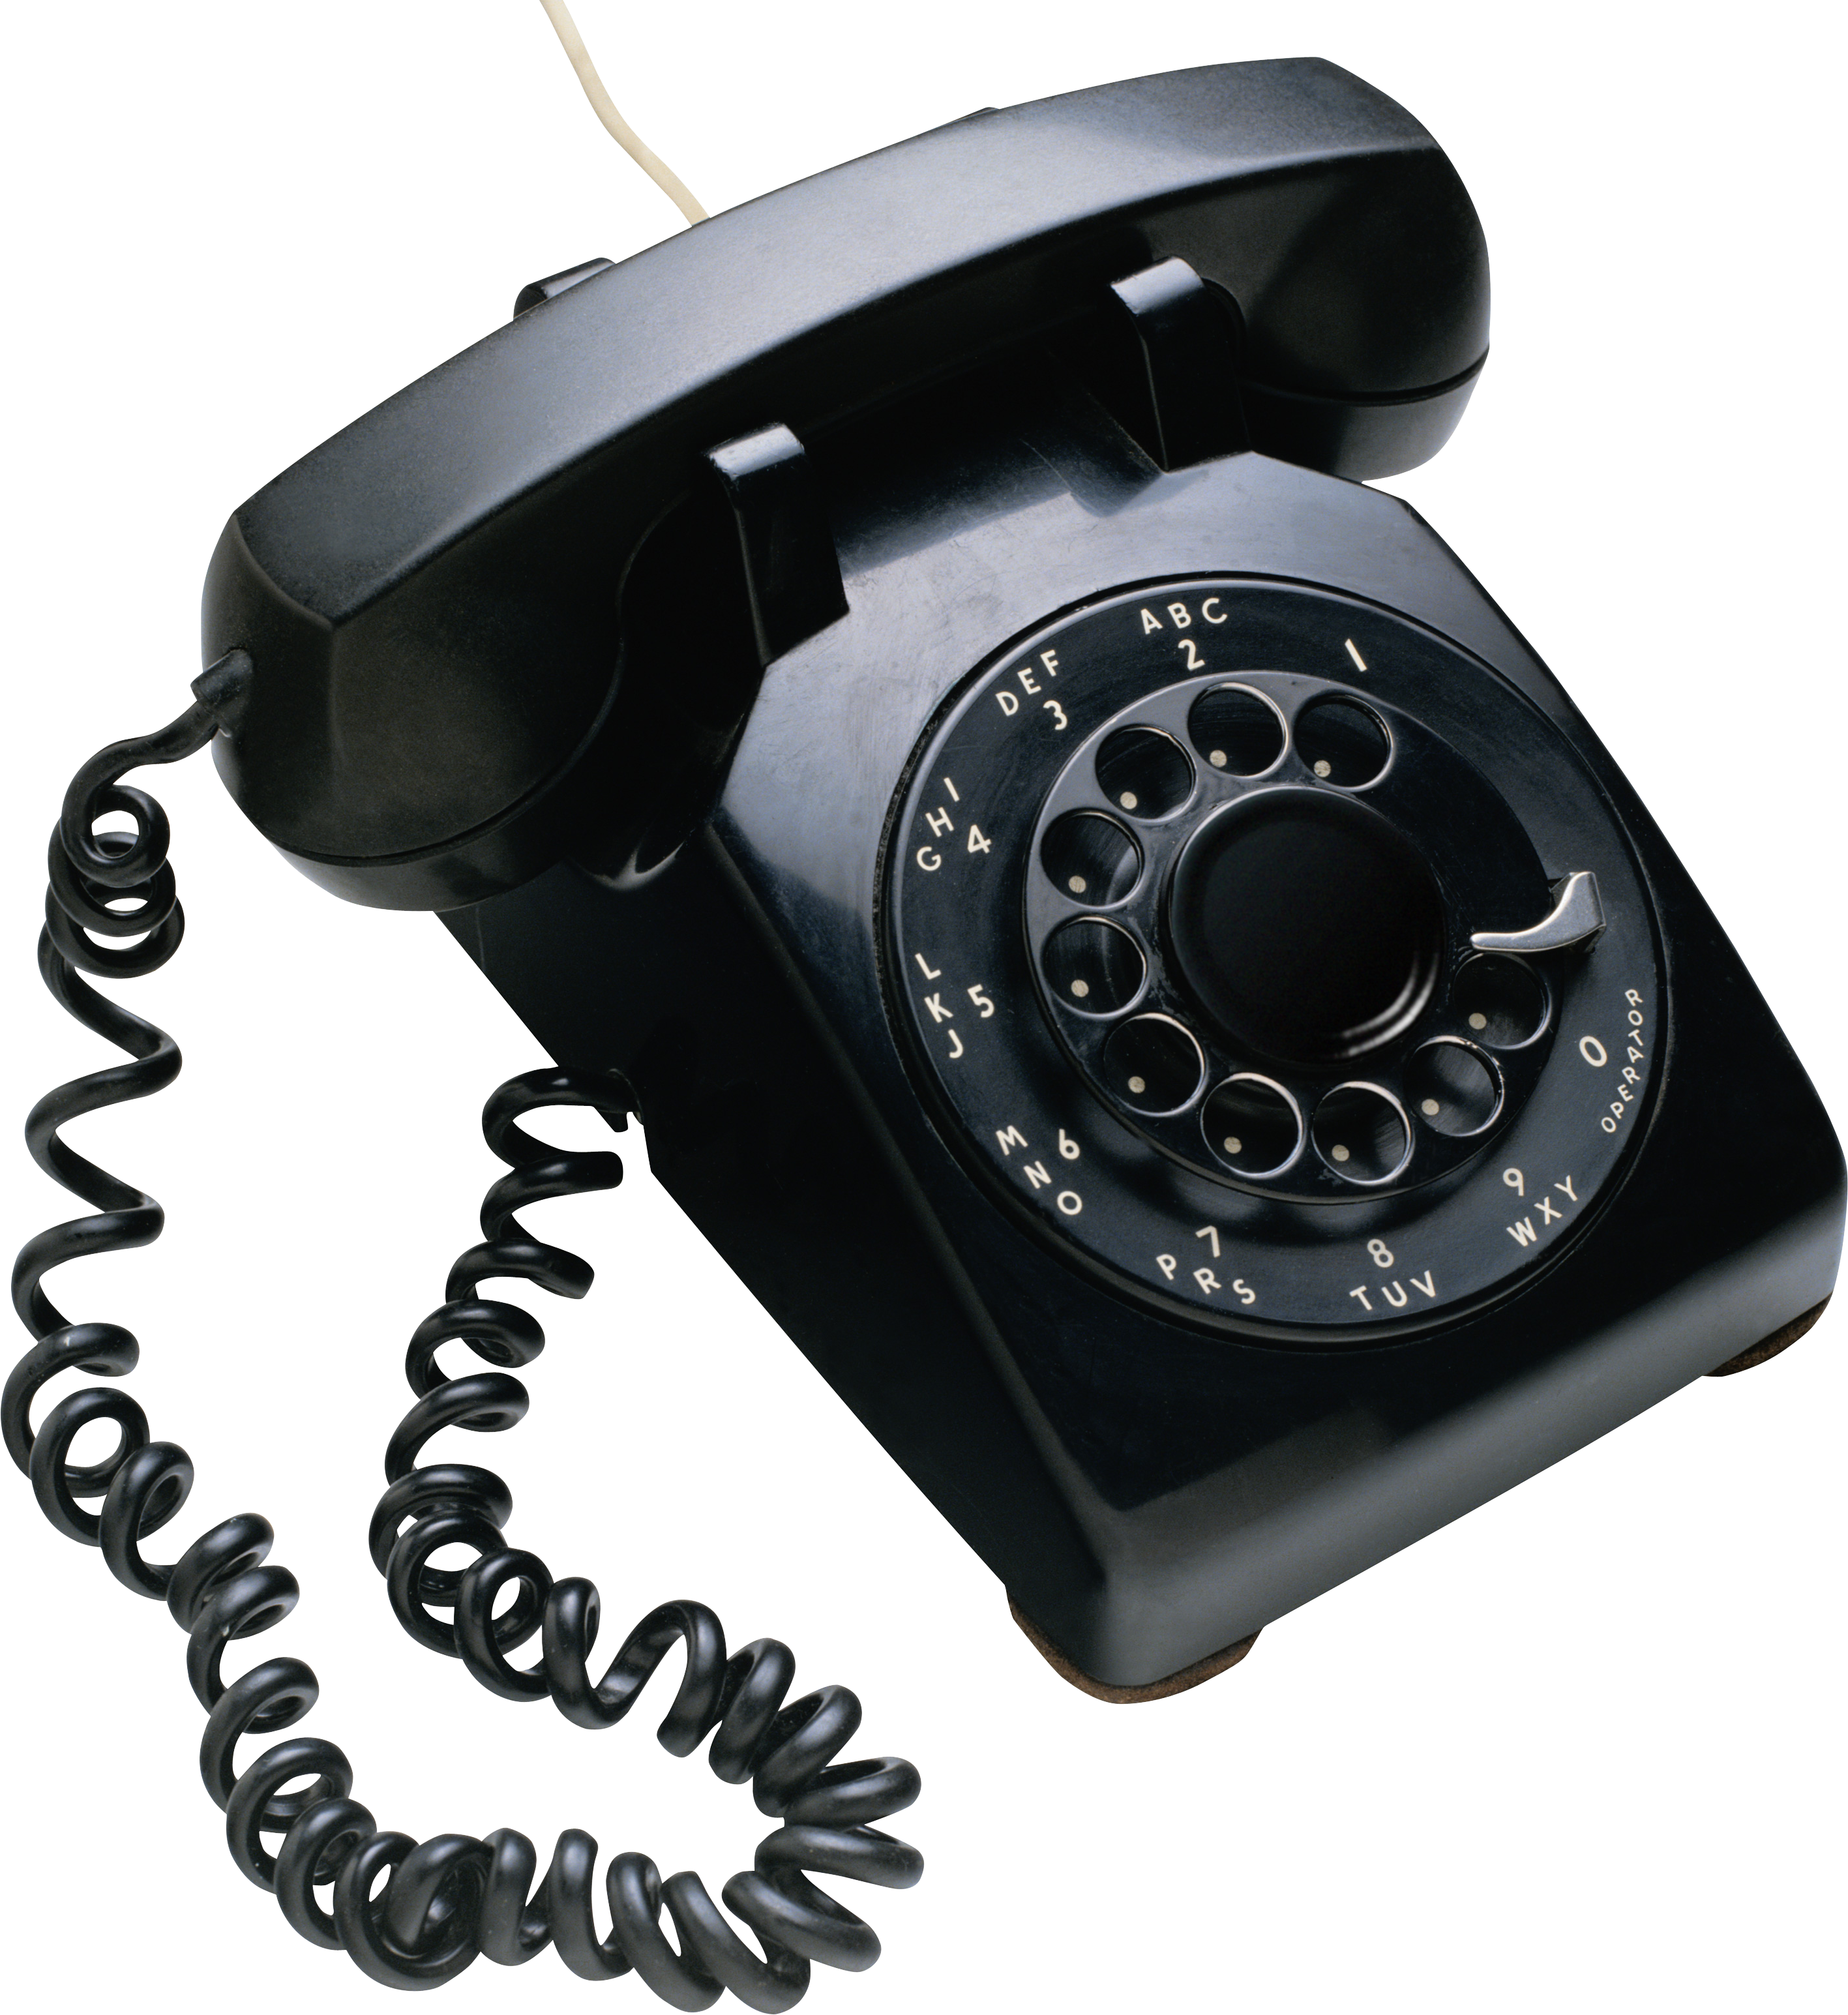 Telefone velho